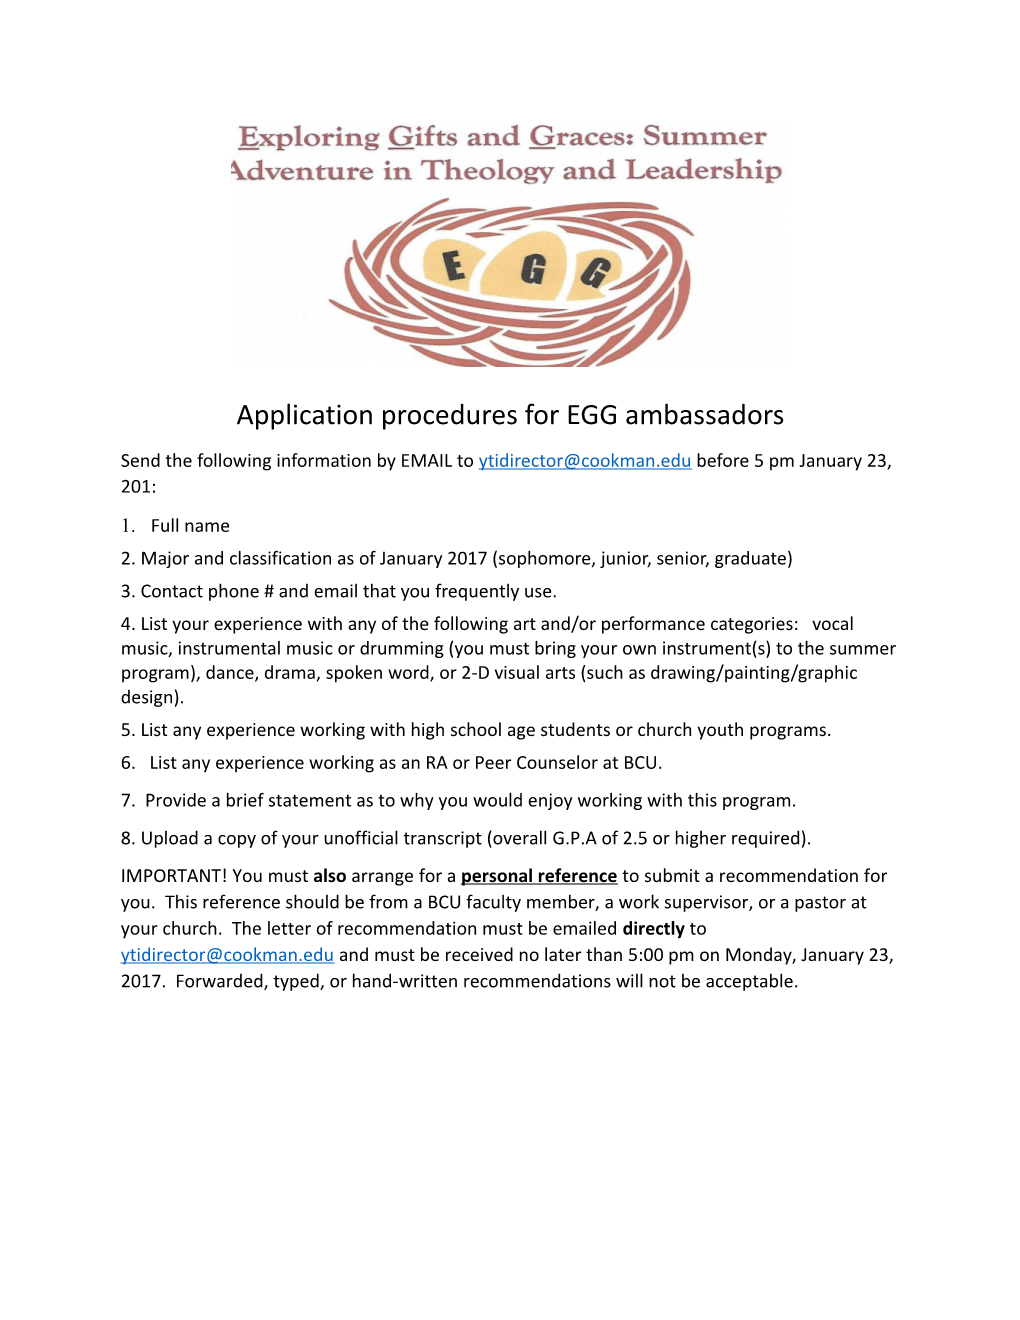 Application Procedures for EGG Ambassadors